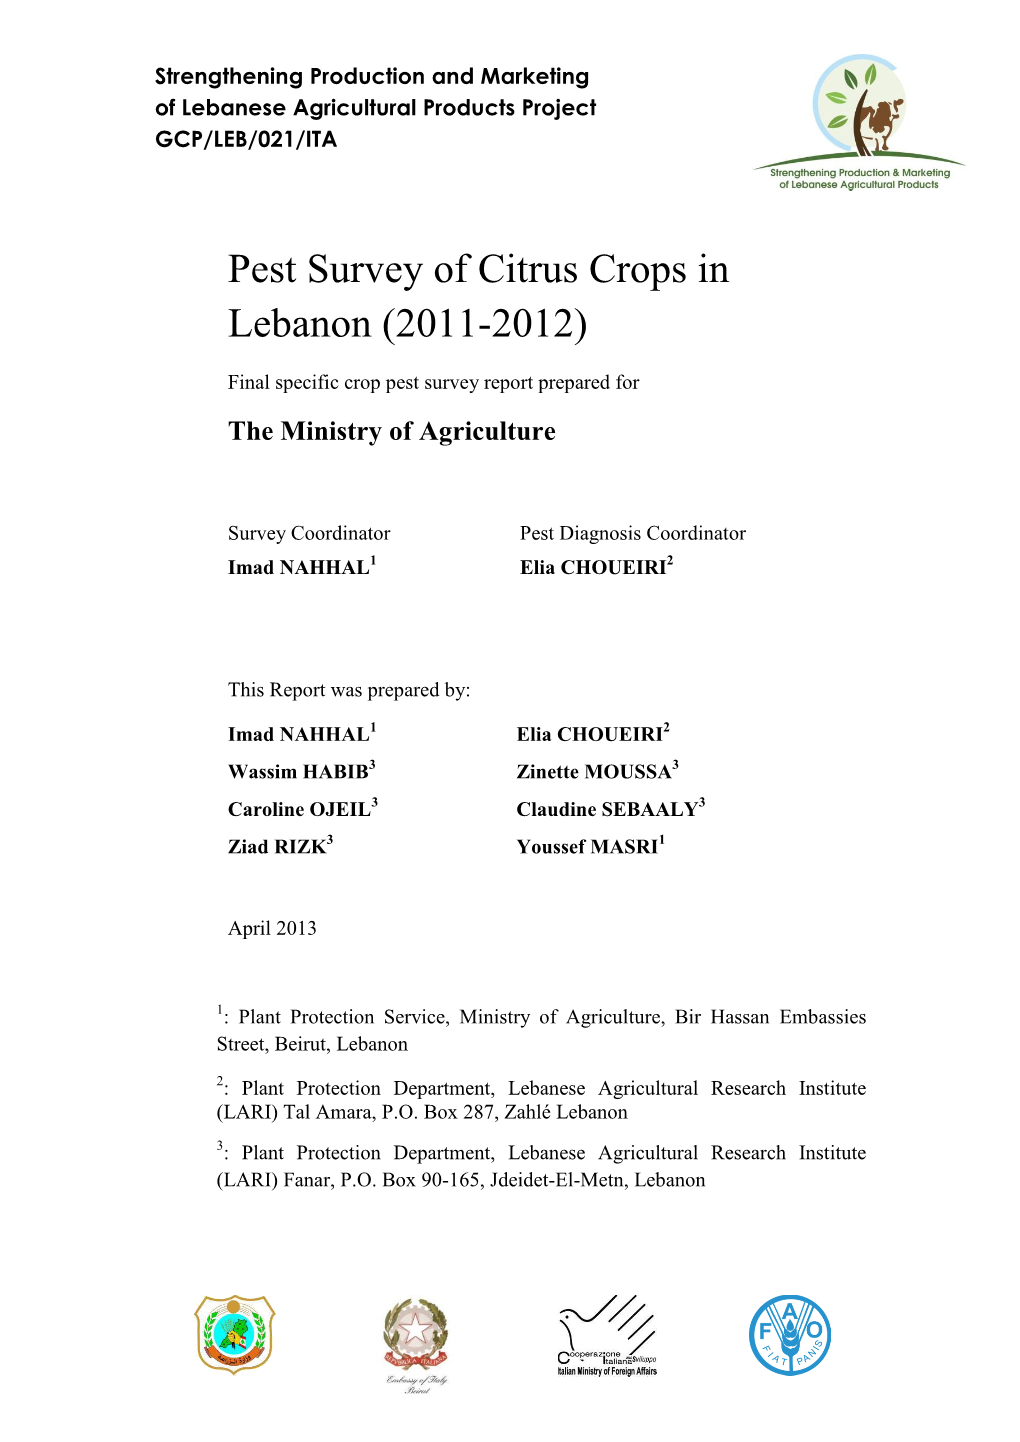 Pest Survey of Citrus Crops in Lebanon (2011-2012)